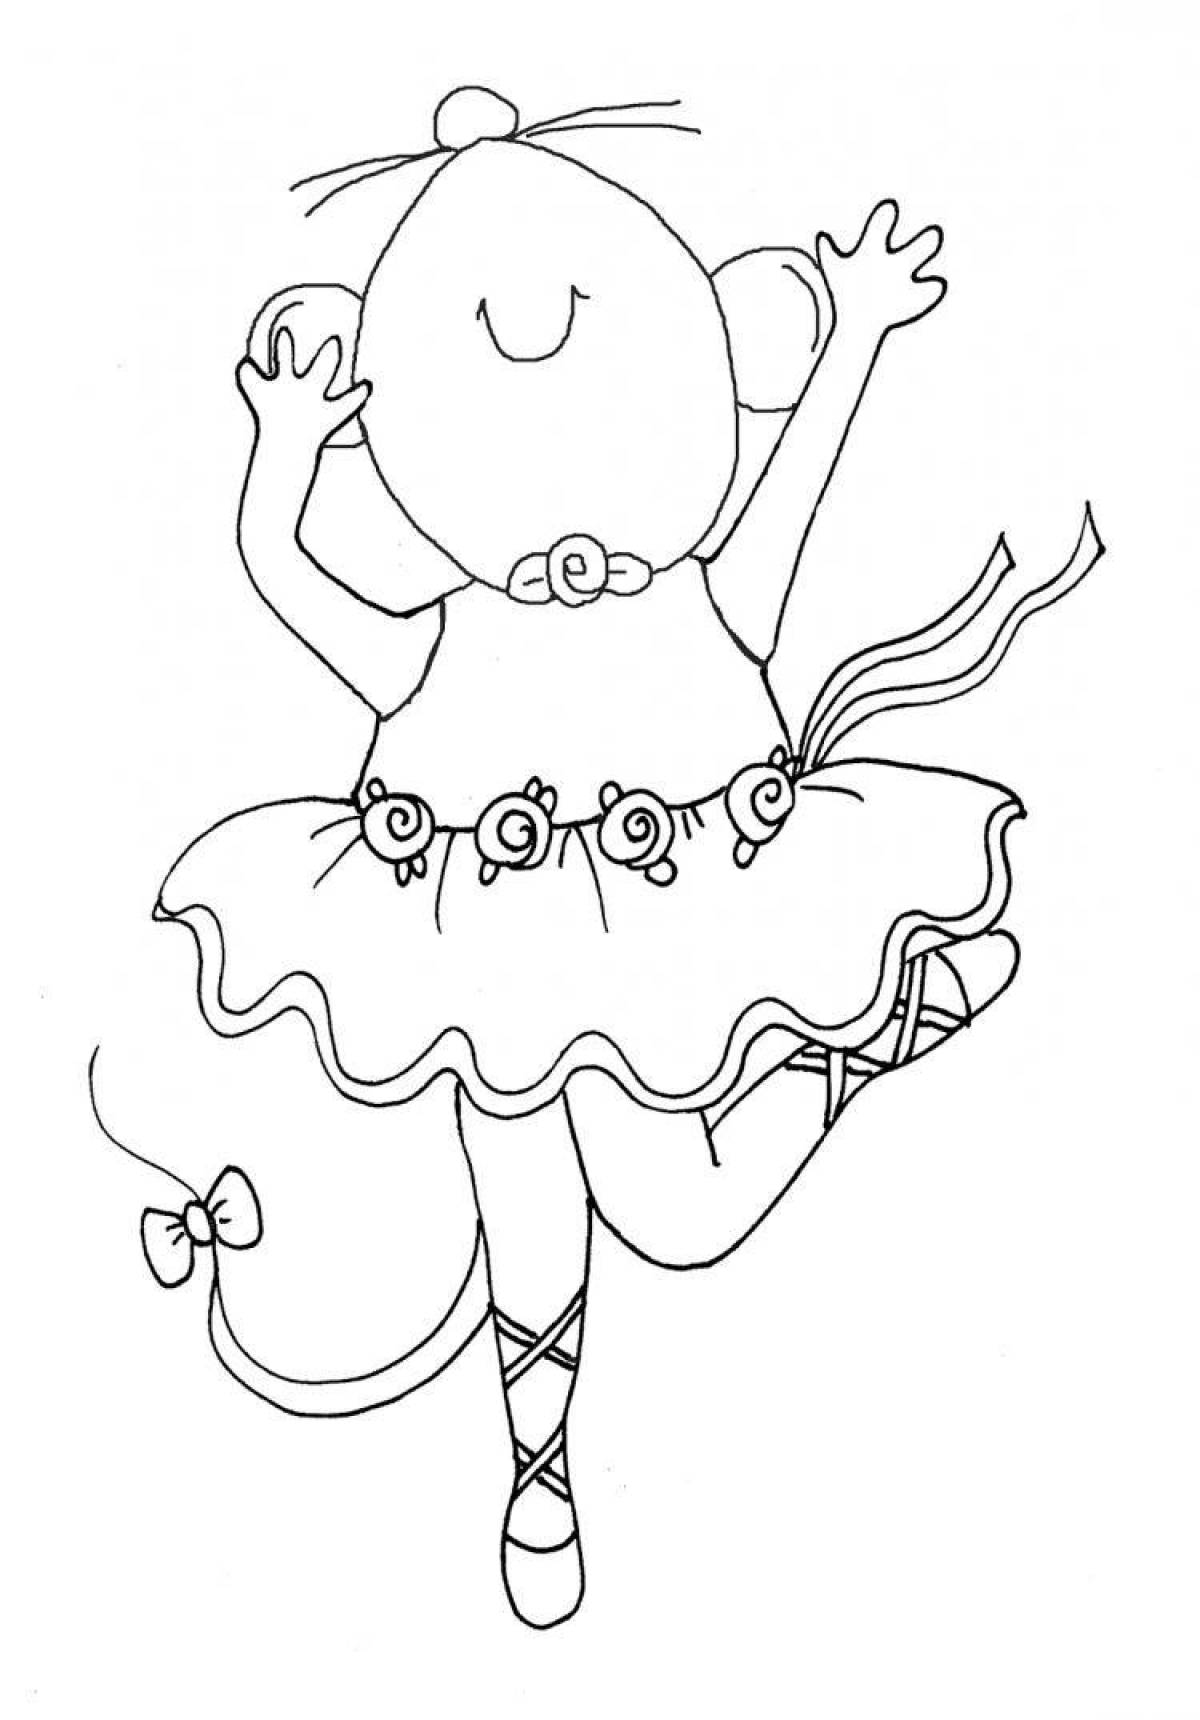 Coloring page charming ballerina bunny